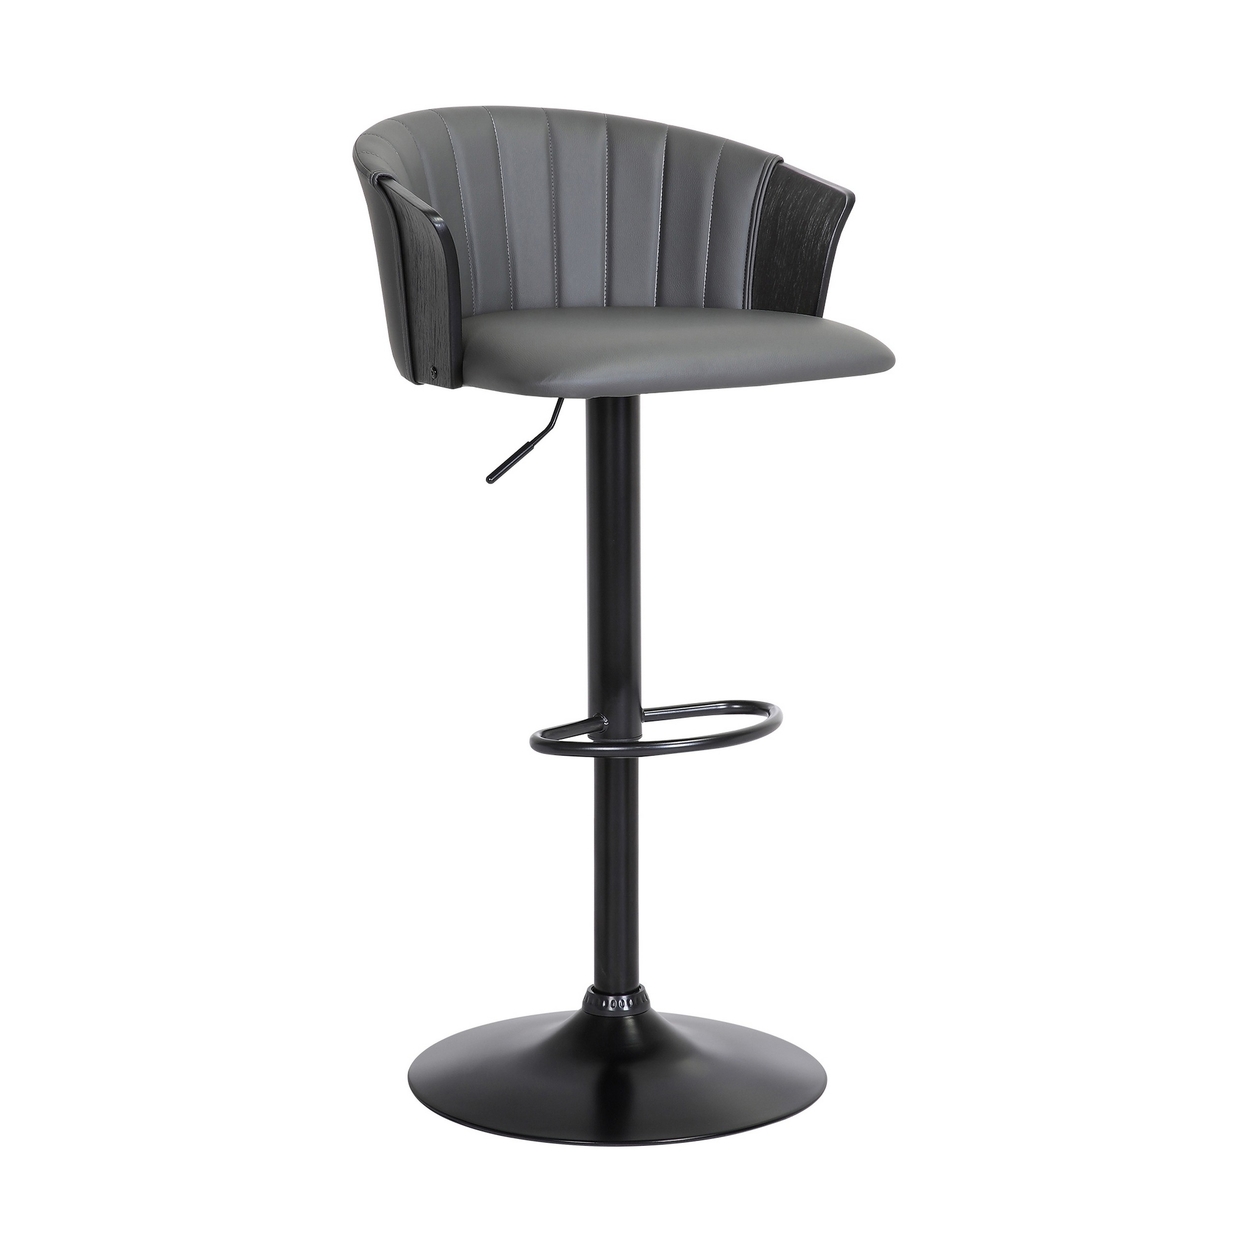 Liz 24-33 Inch Adjustable Height Swivel Barstool Chair, Faux Leather, Black - Saltoro Sherpi